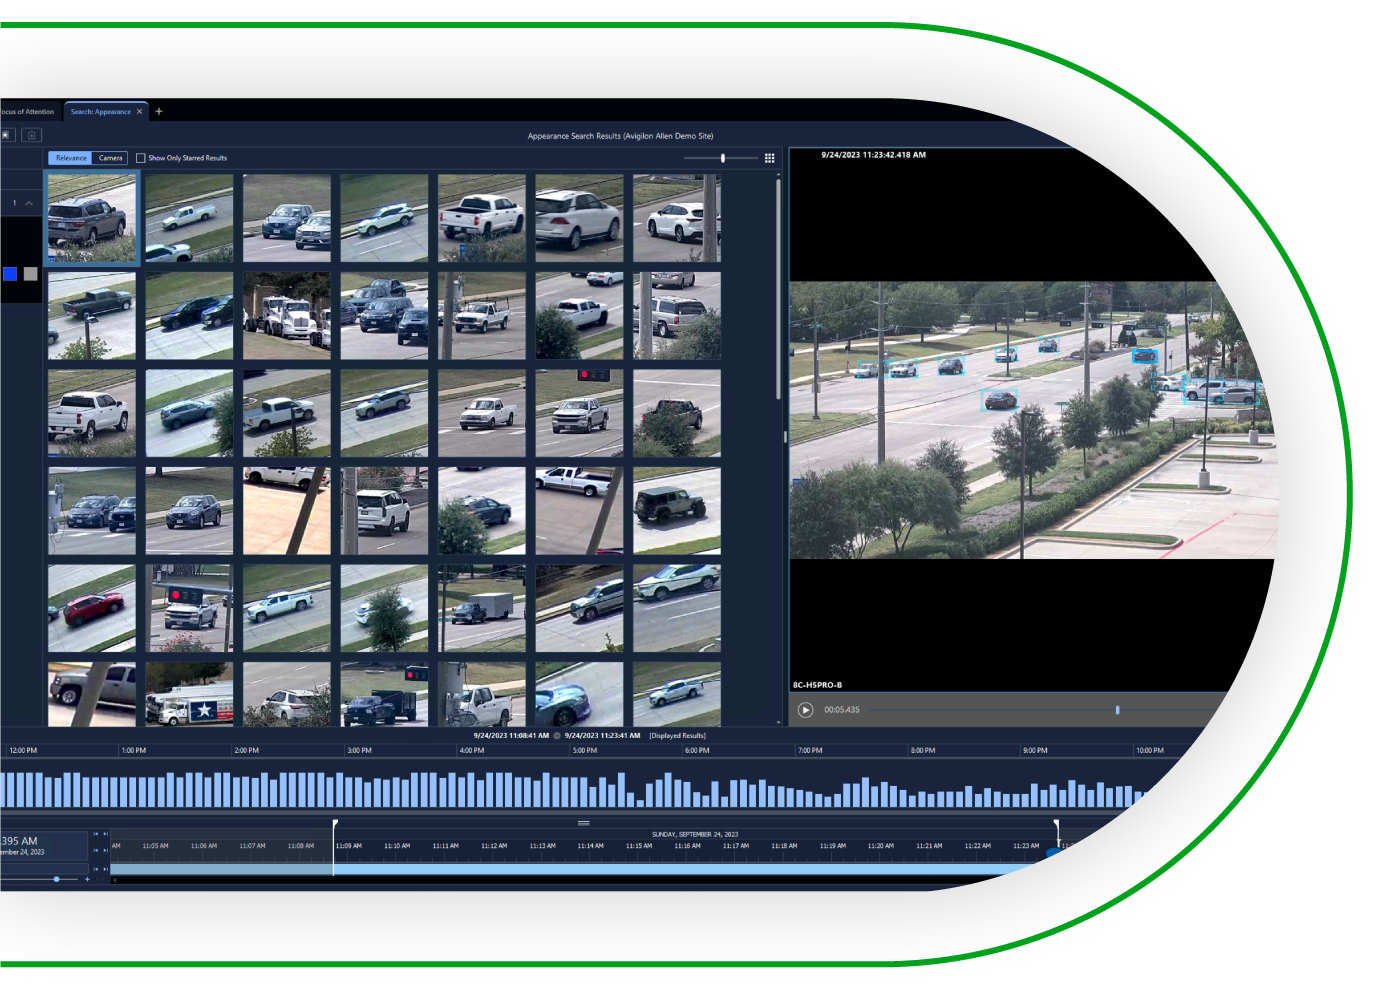  video surveillance camera system